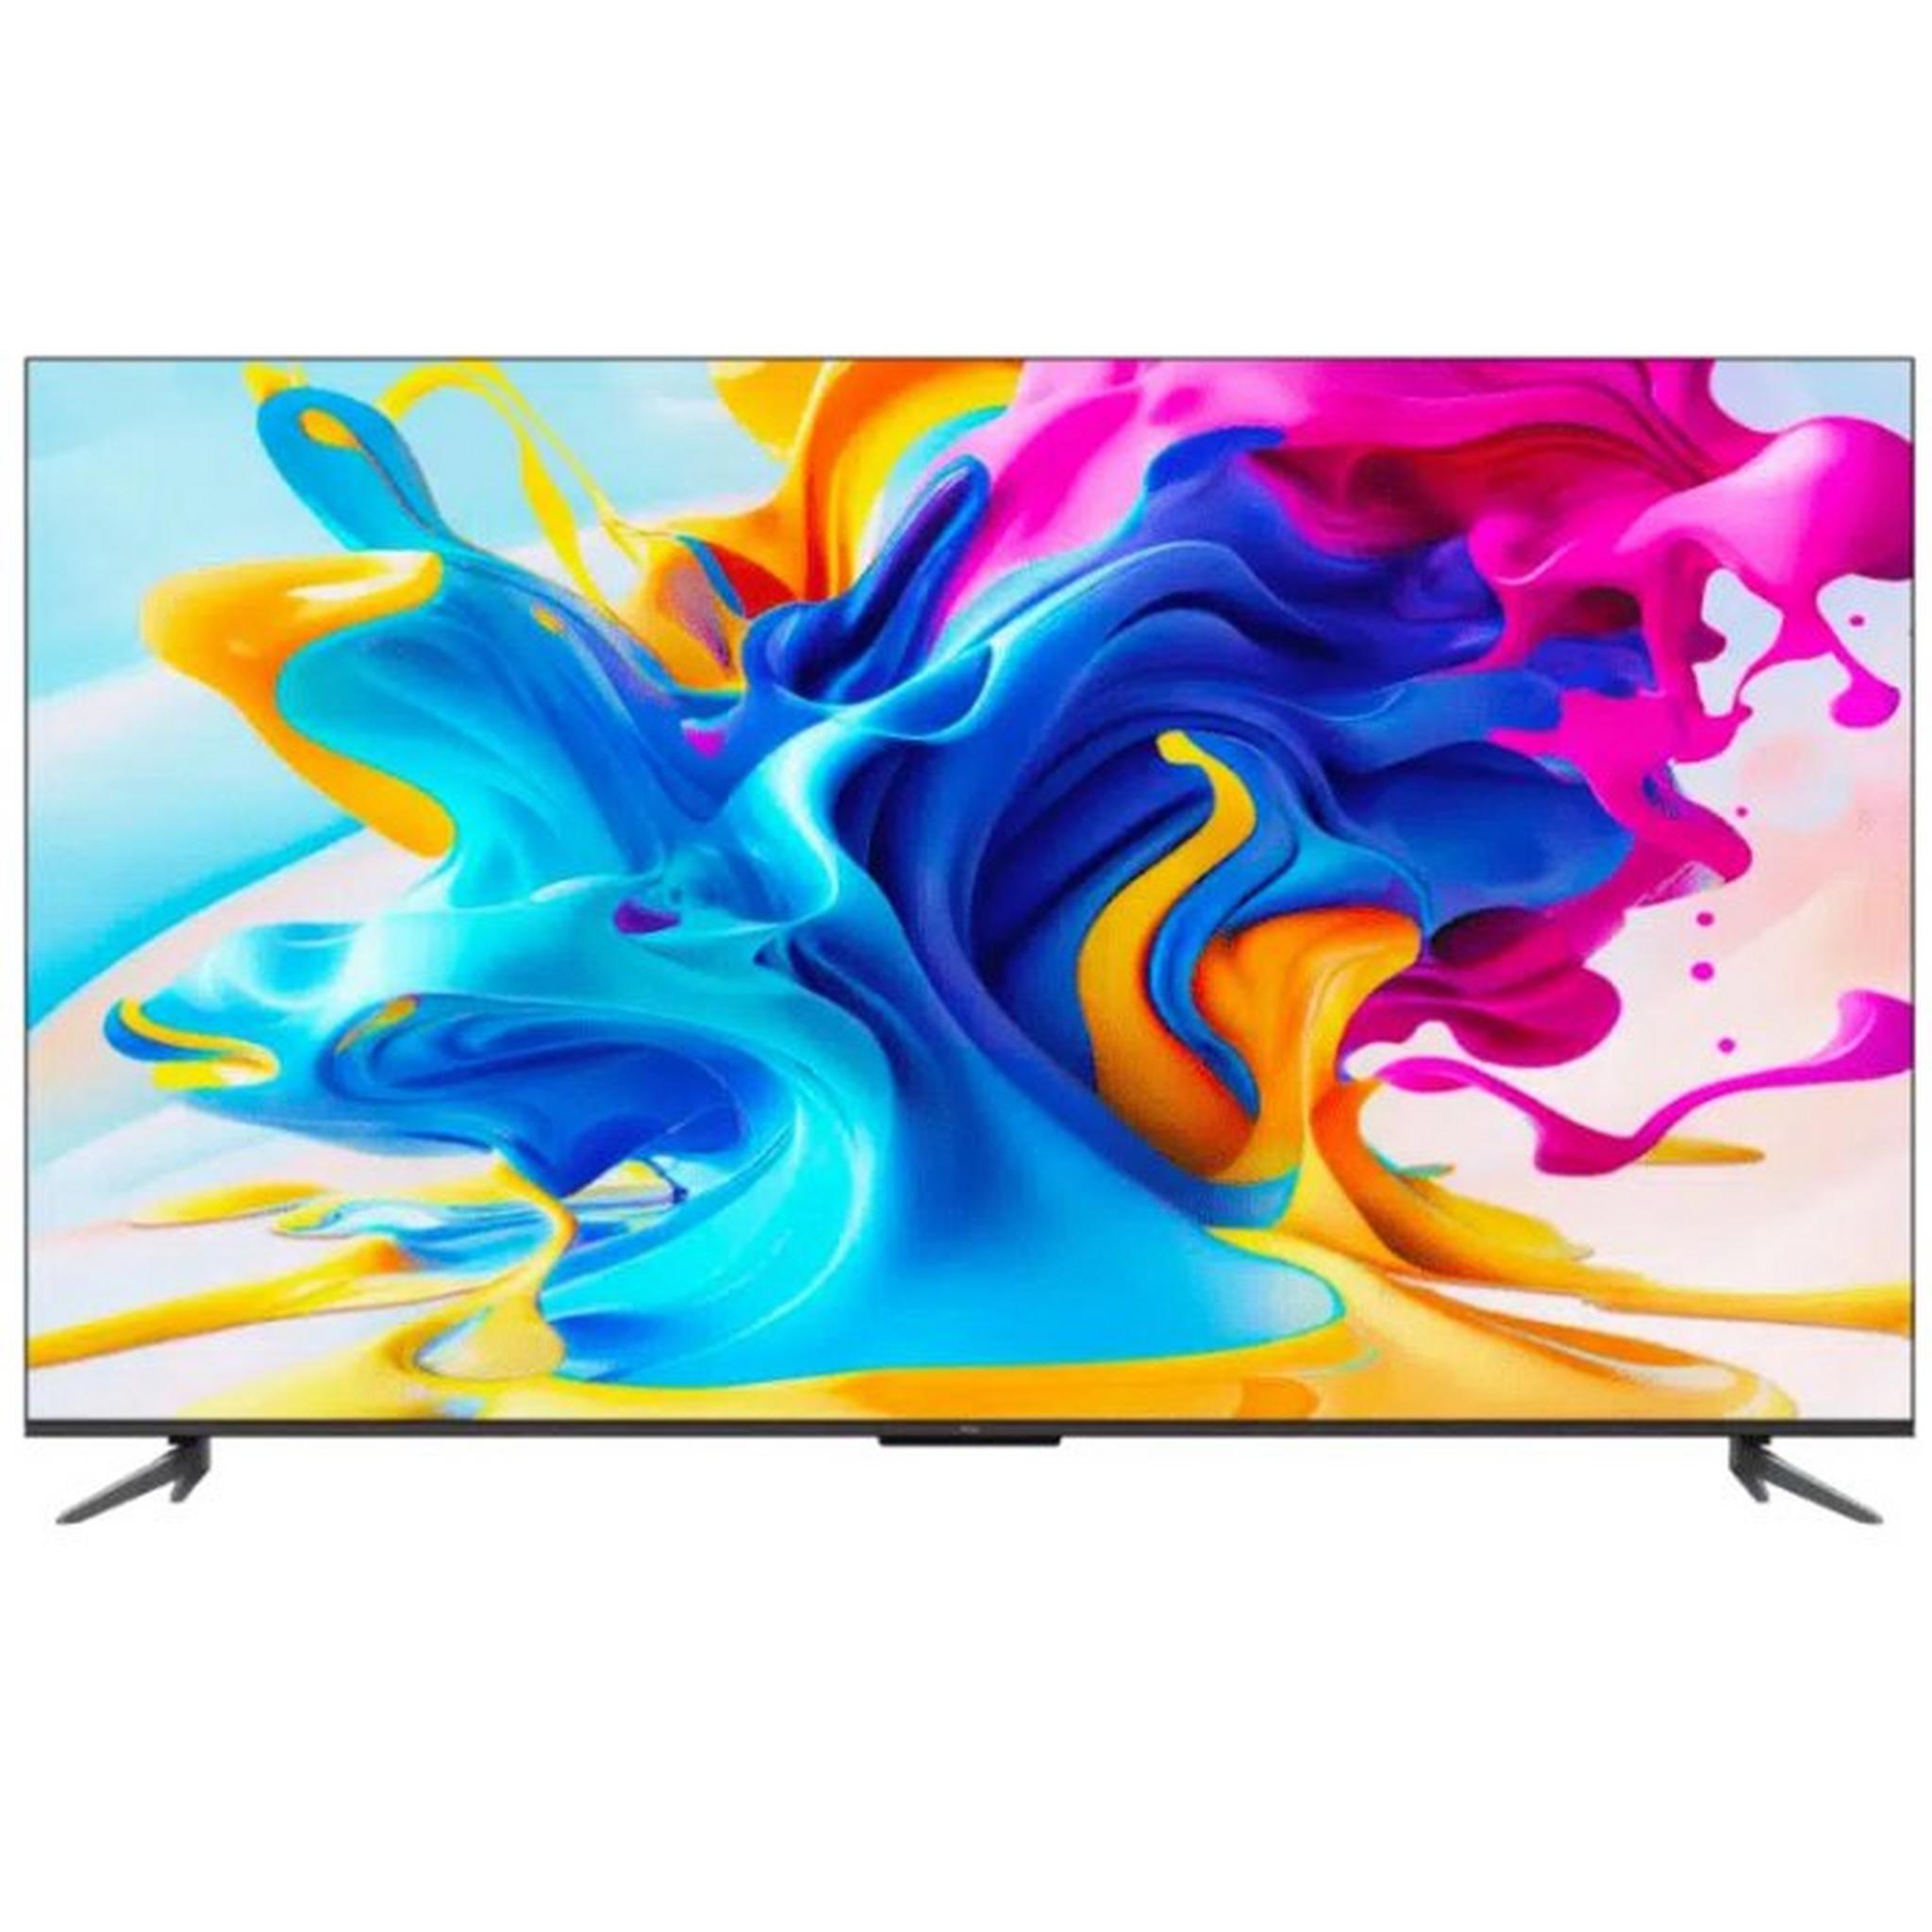 TCL 50-inch 4K UHD QLED Smart Google TV, 60 HZ, 50C645 – Black